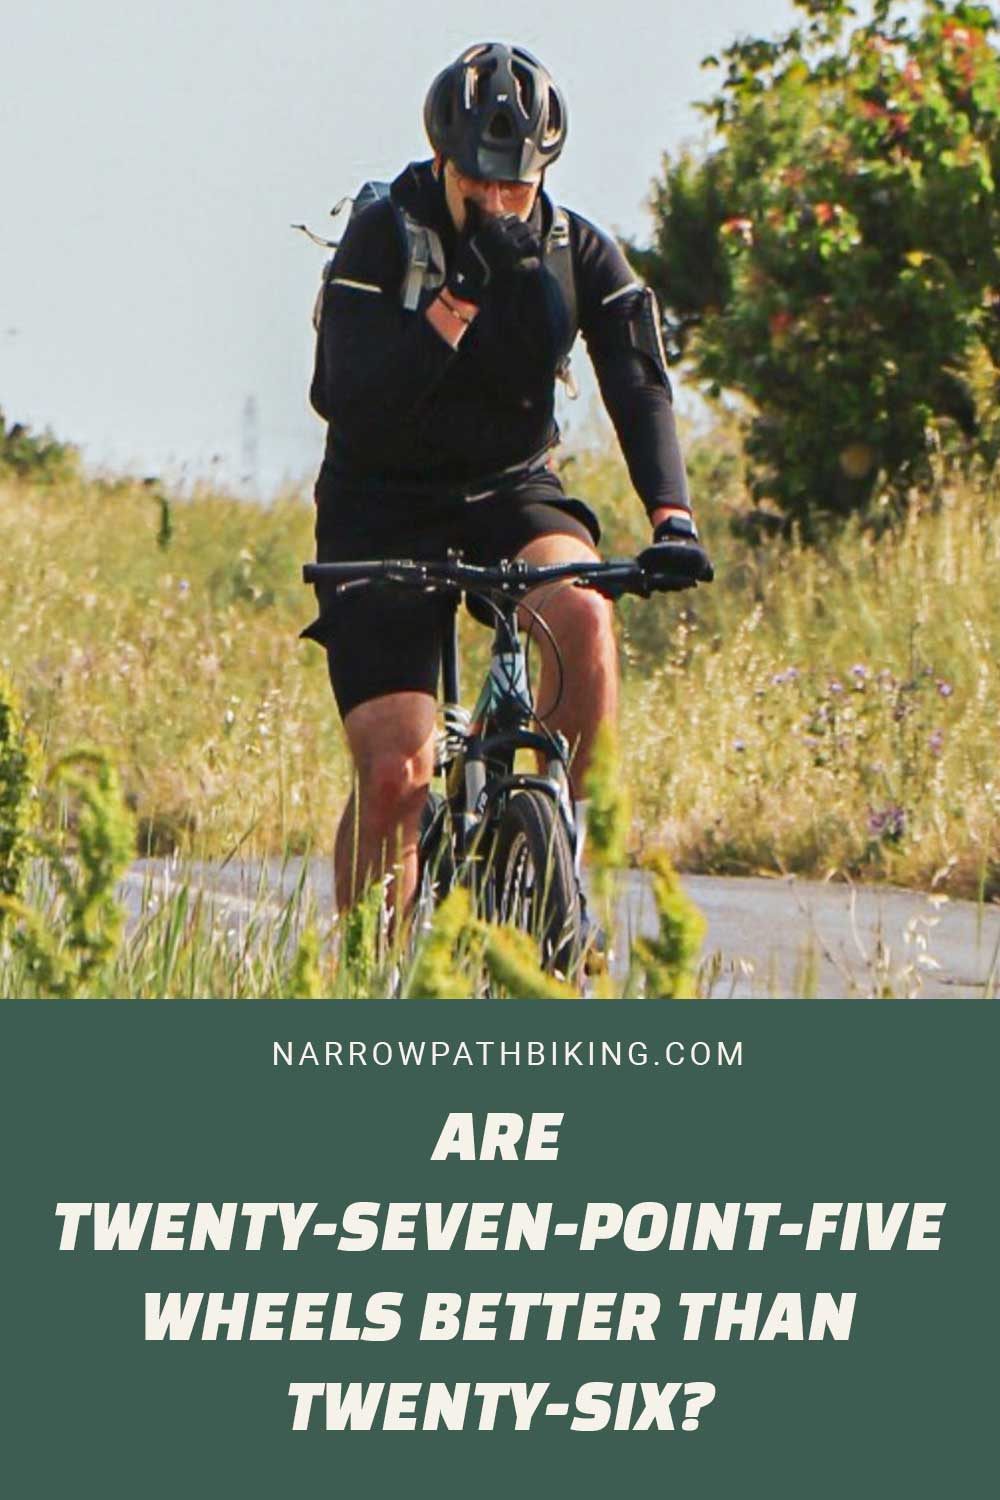 Man in black jacket and shorts on a bike - Are Twenty-Seven-Point-Five Wheels Better Than Twenty-Six?